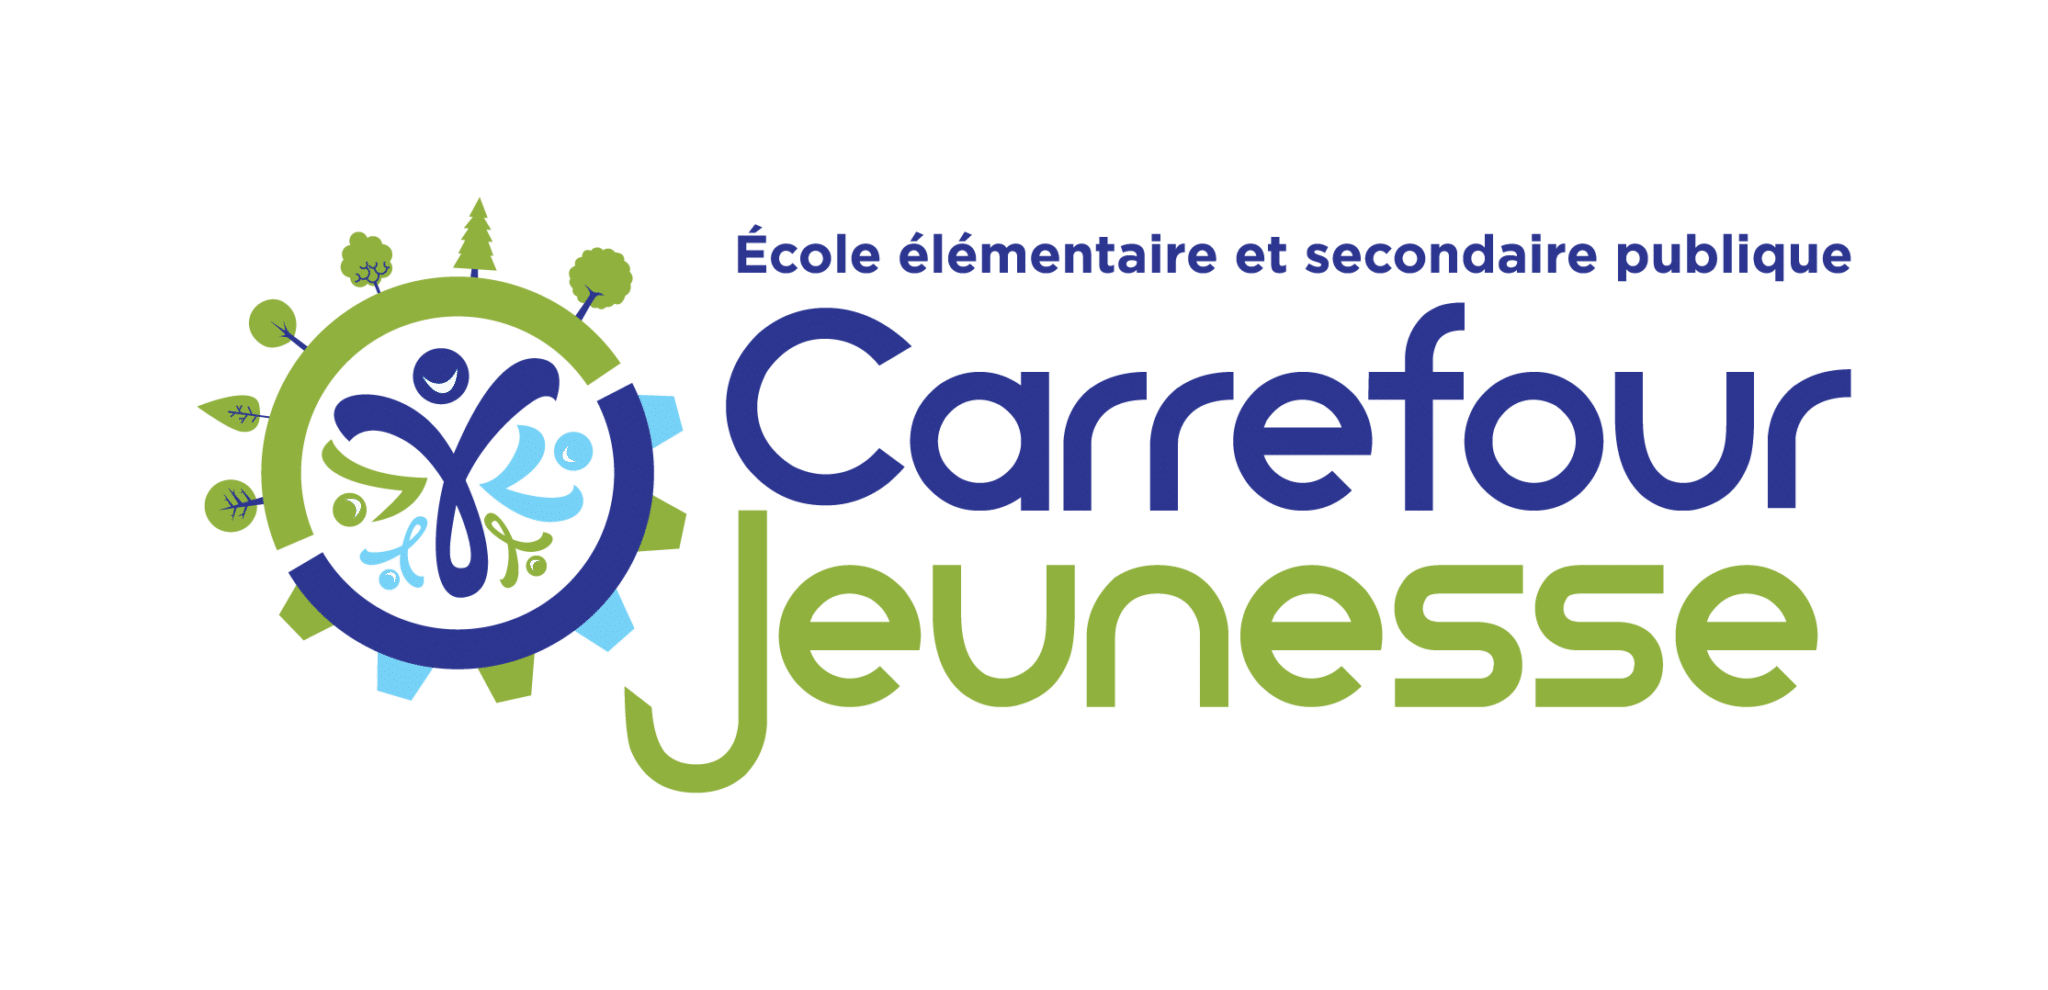 Logo Carrefour Jeunesse